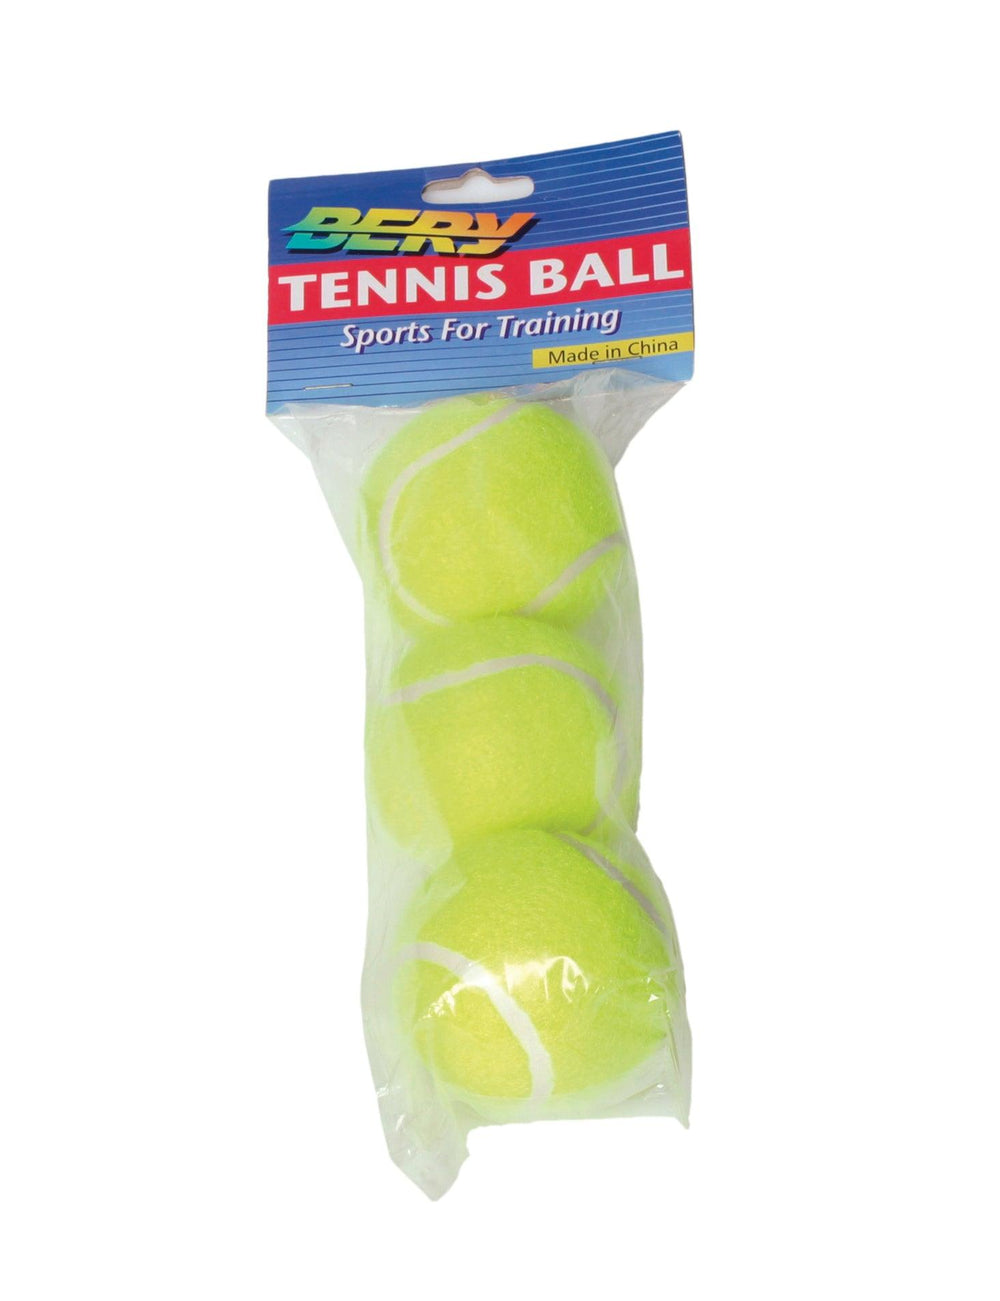 PRESSURELESS TENNIS BALLS - Marcotte Sports Inc